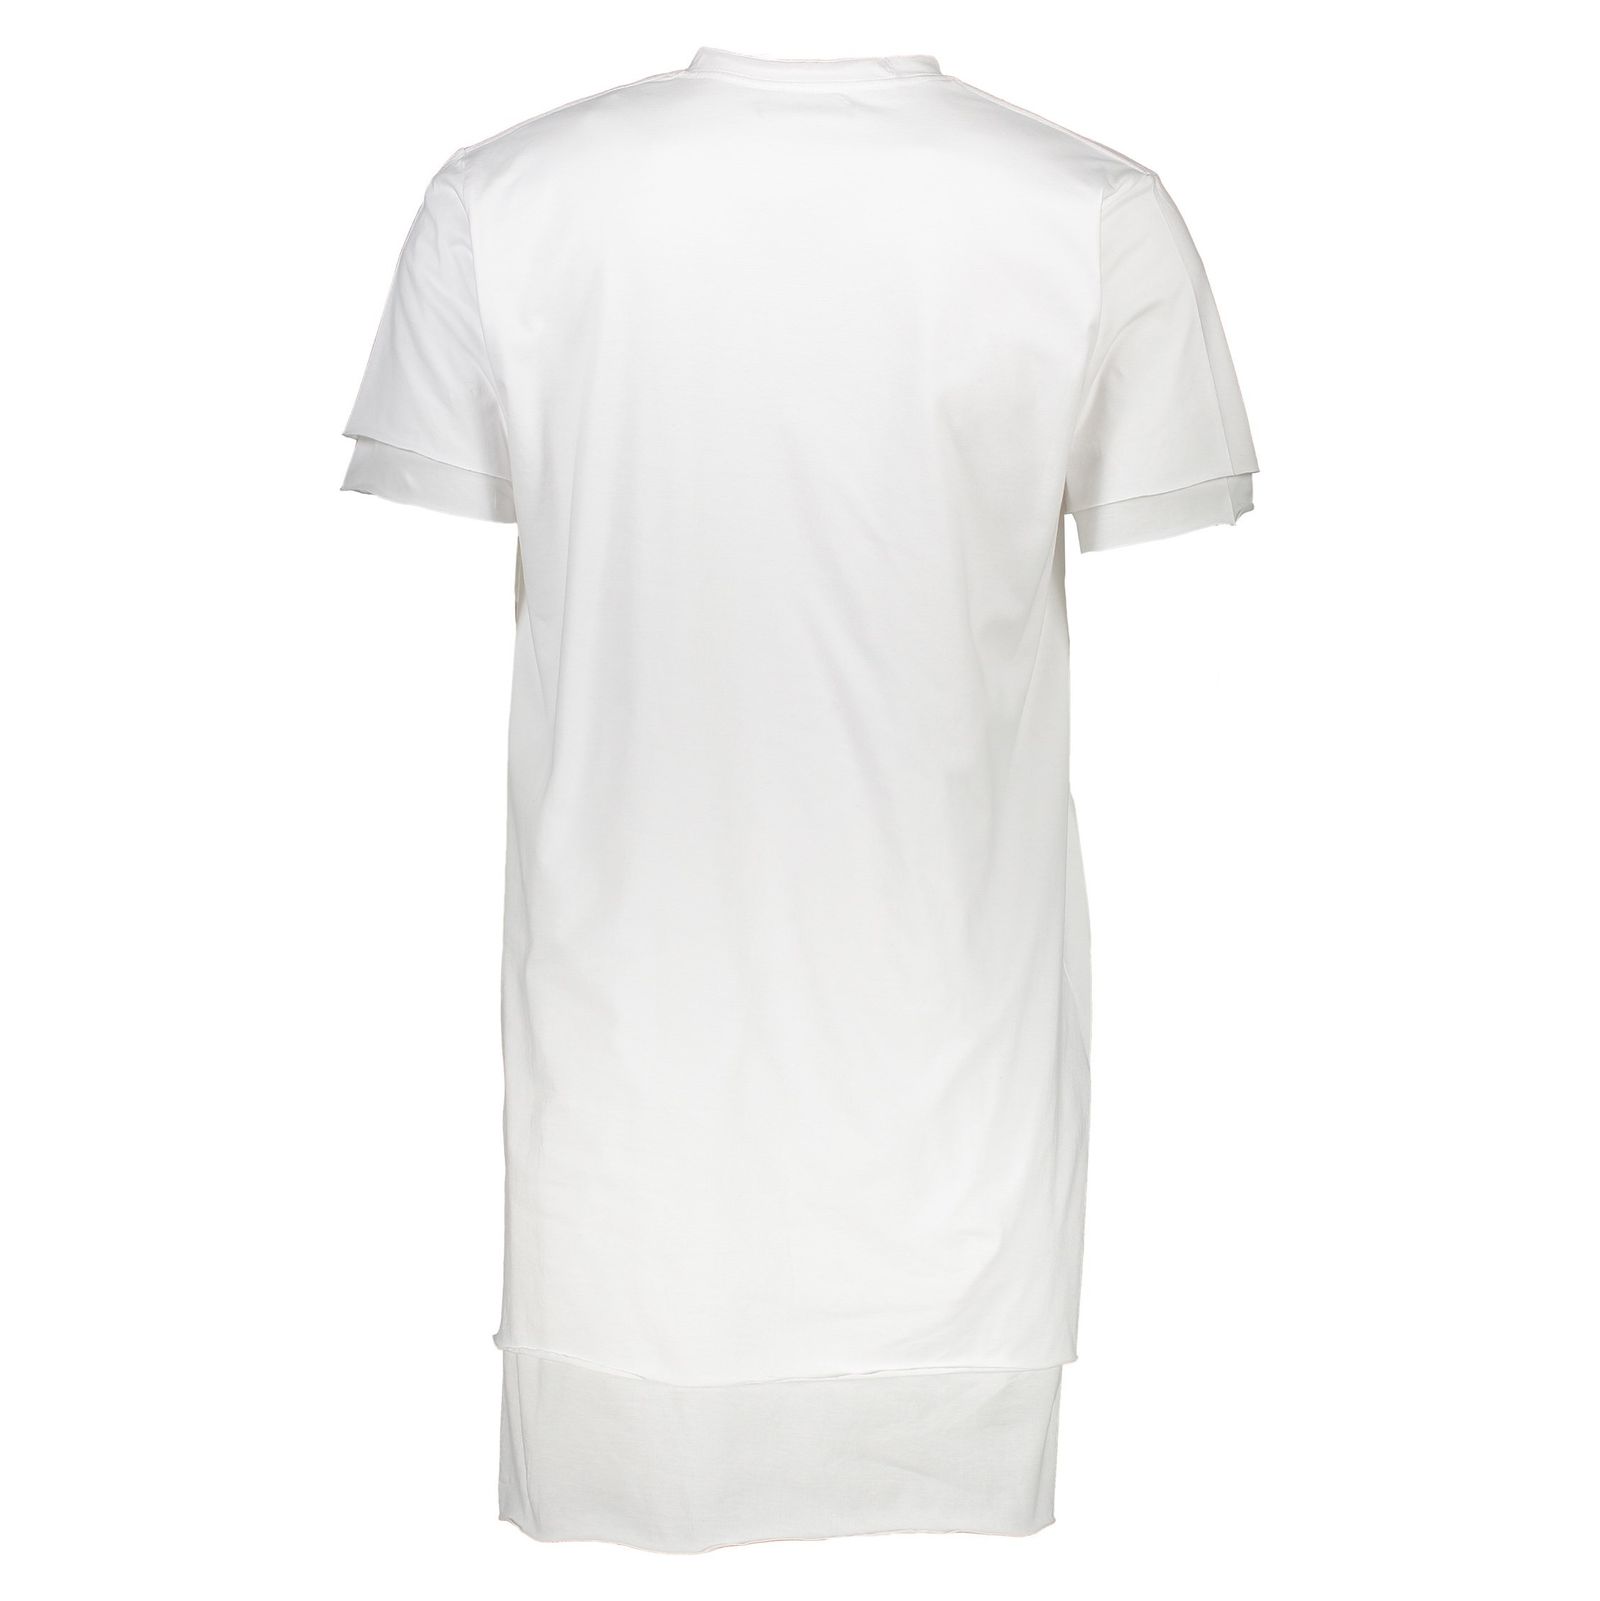 تی شرت ویسکوز یقه گرد مردانه Double Layer - یونیتی - سفيد - 3